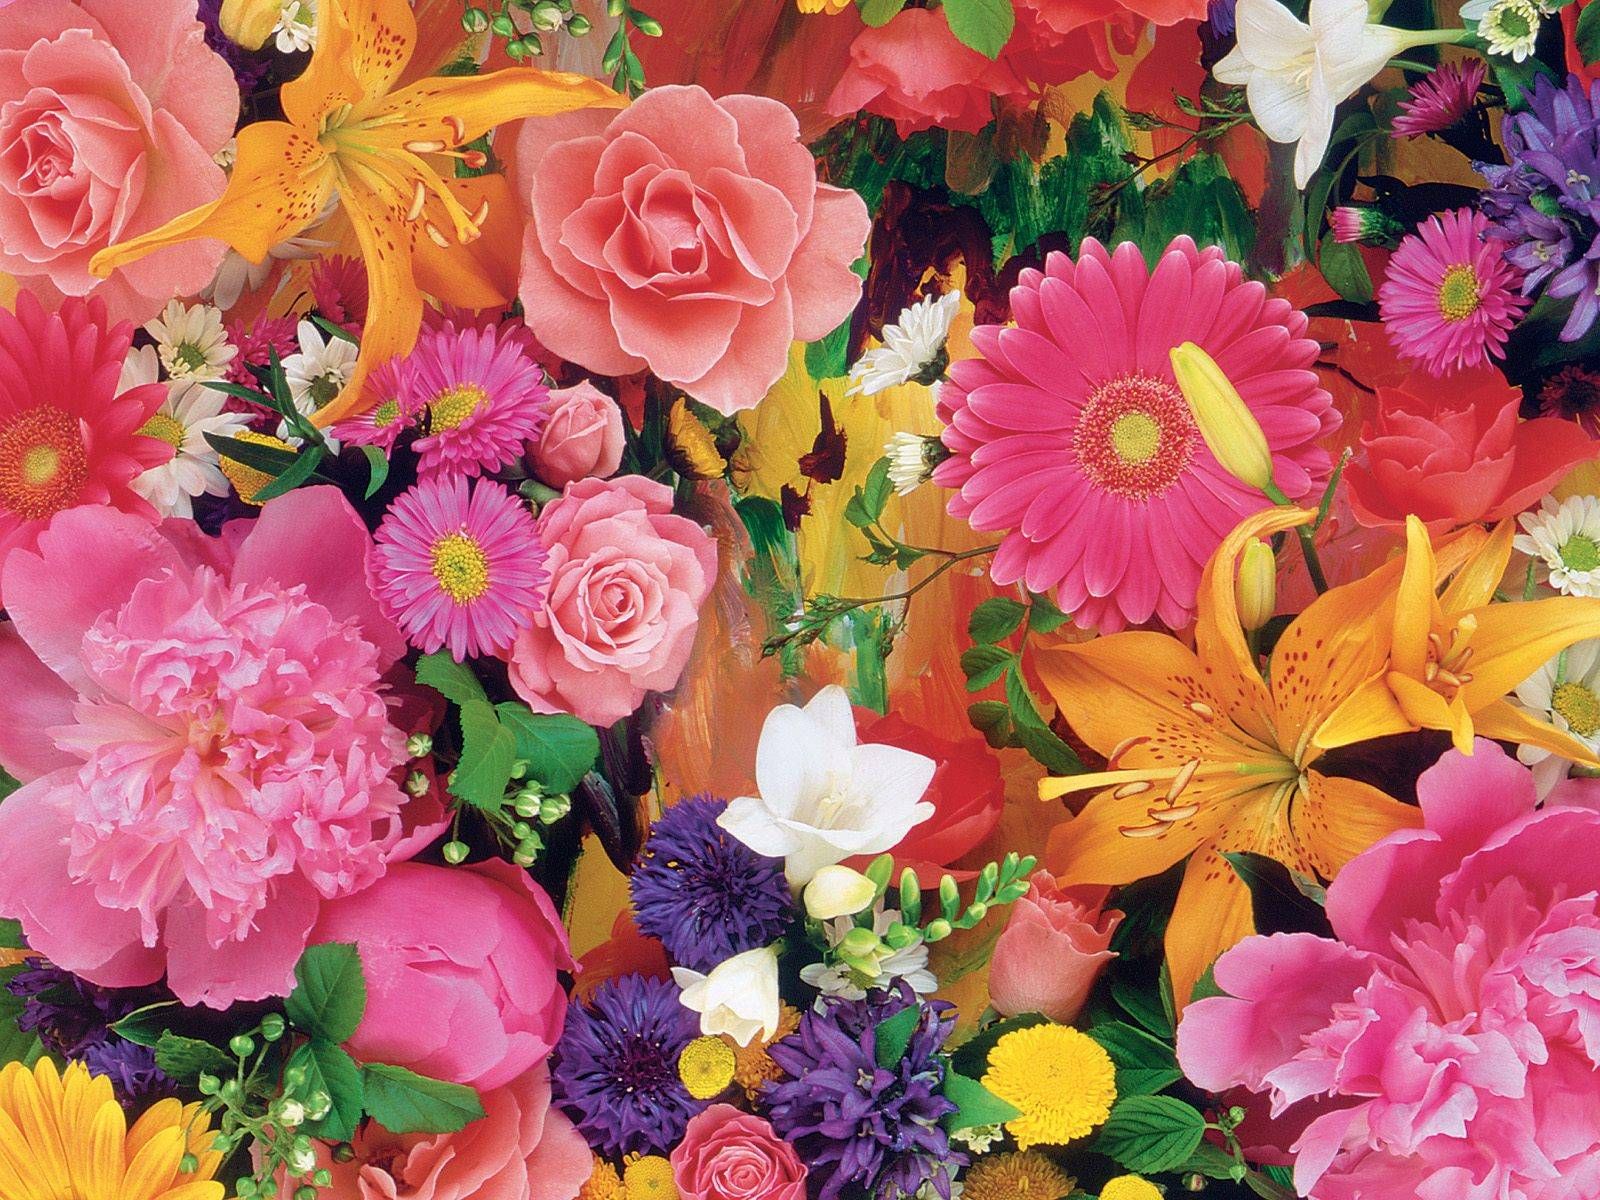 flowers | colourful flowers 1 - flower Fanart | Flora | Pinterest ...